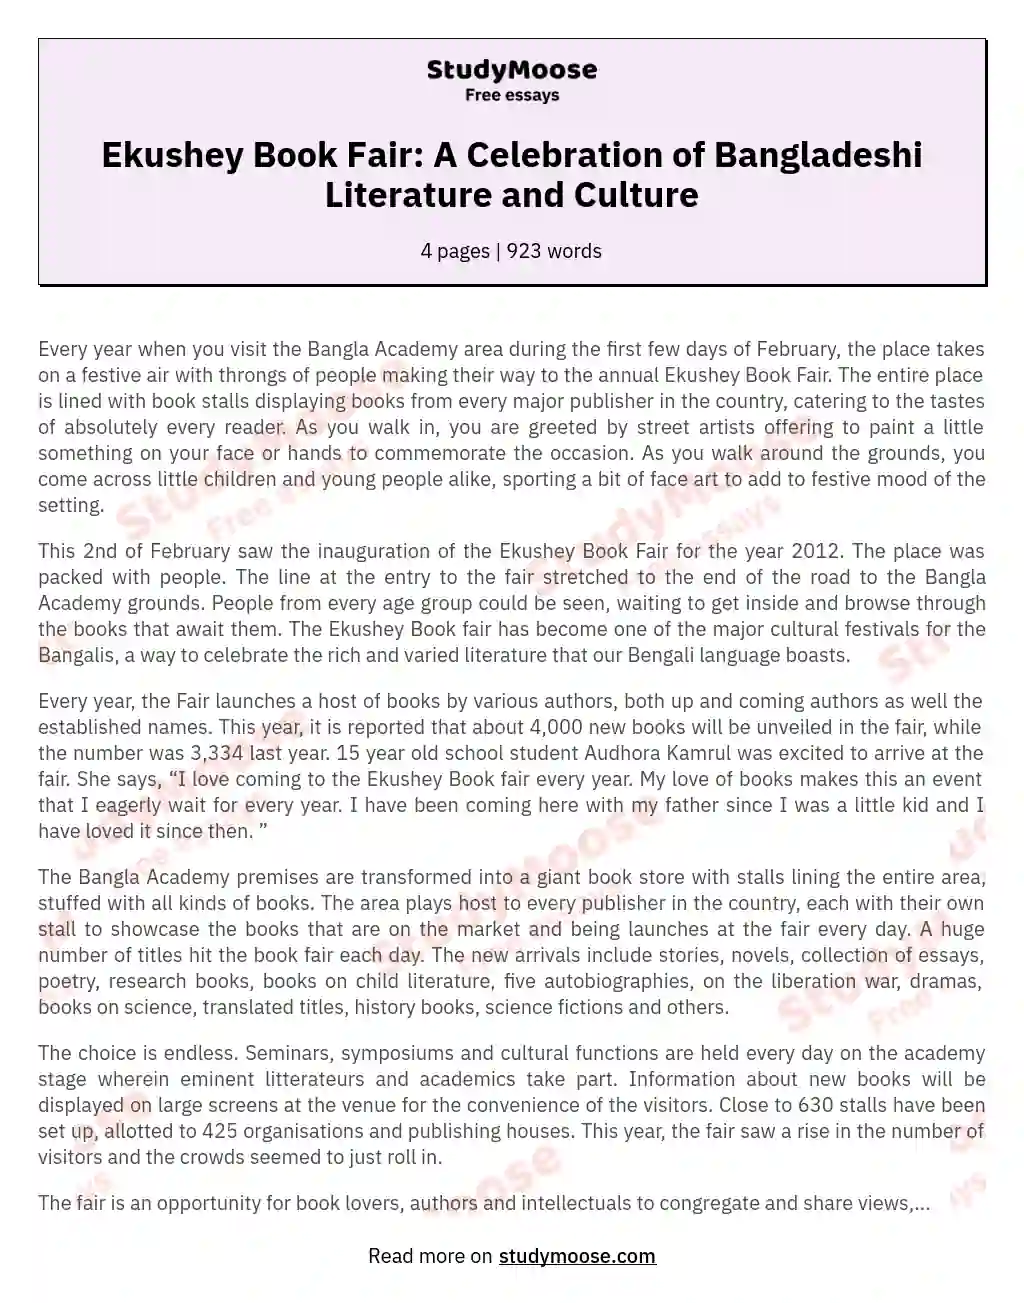 Ekushey Book Fair: A Celebration of Bangladeshi Literature and Culture essay